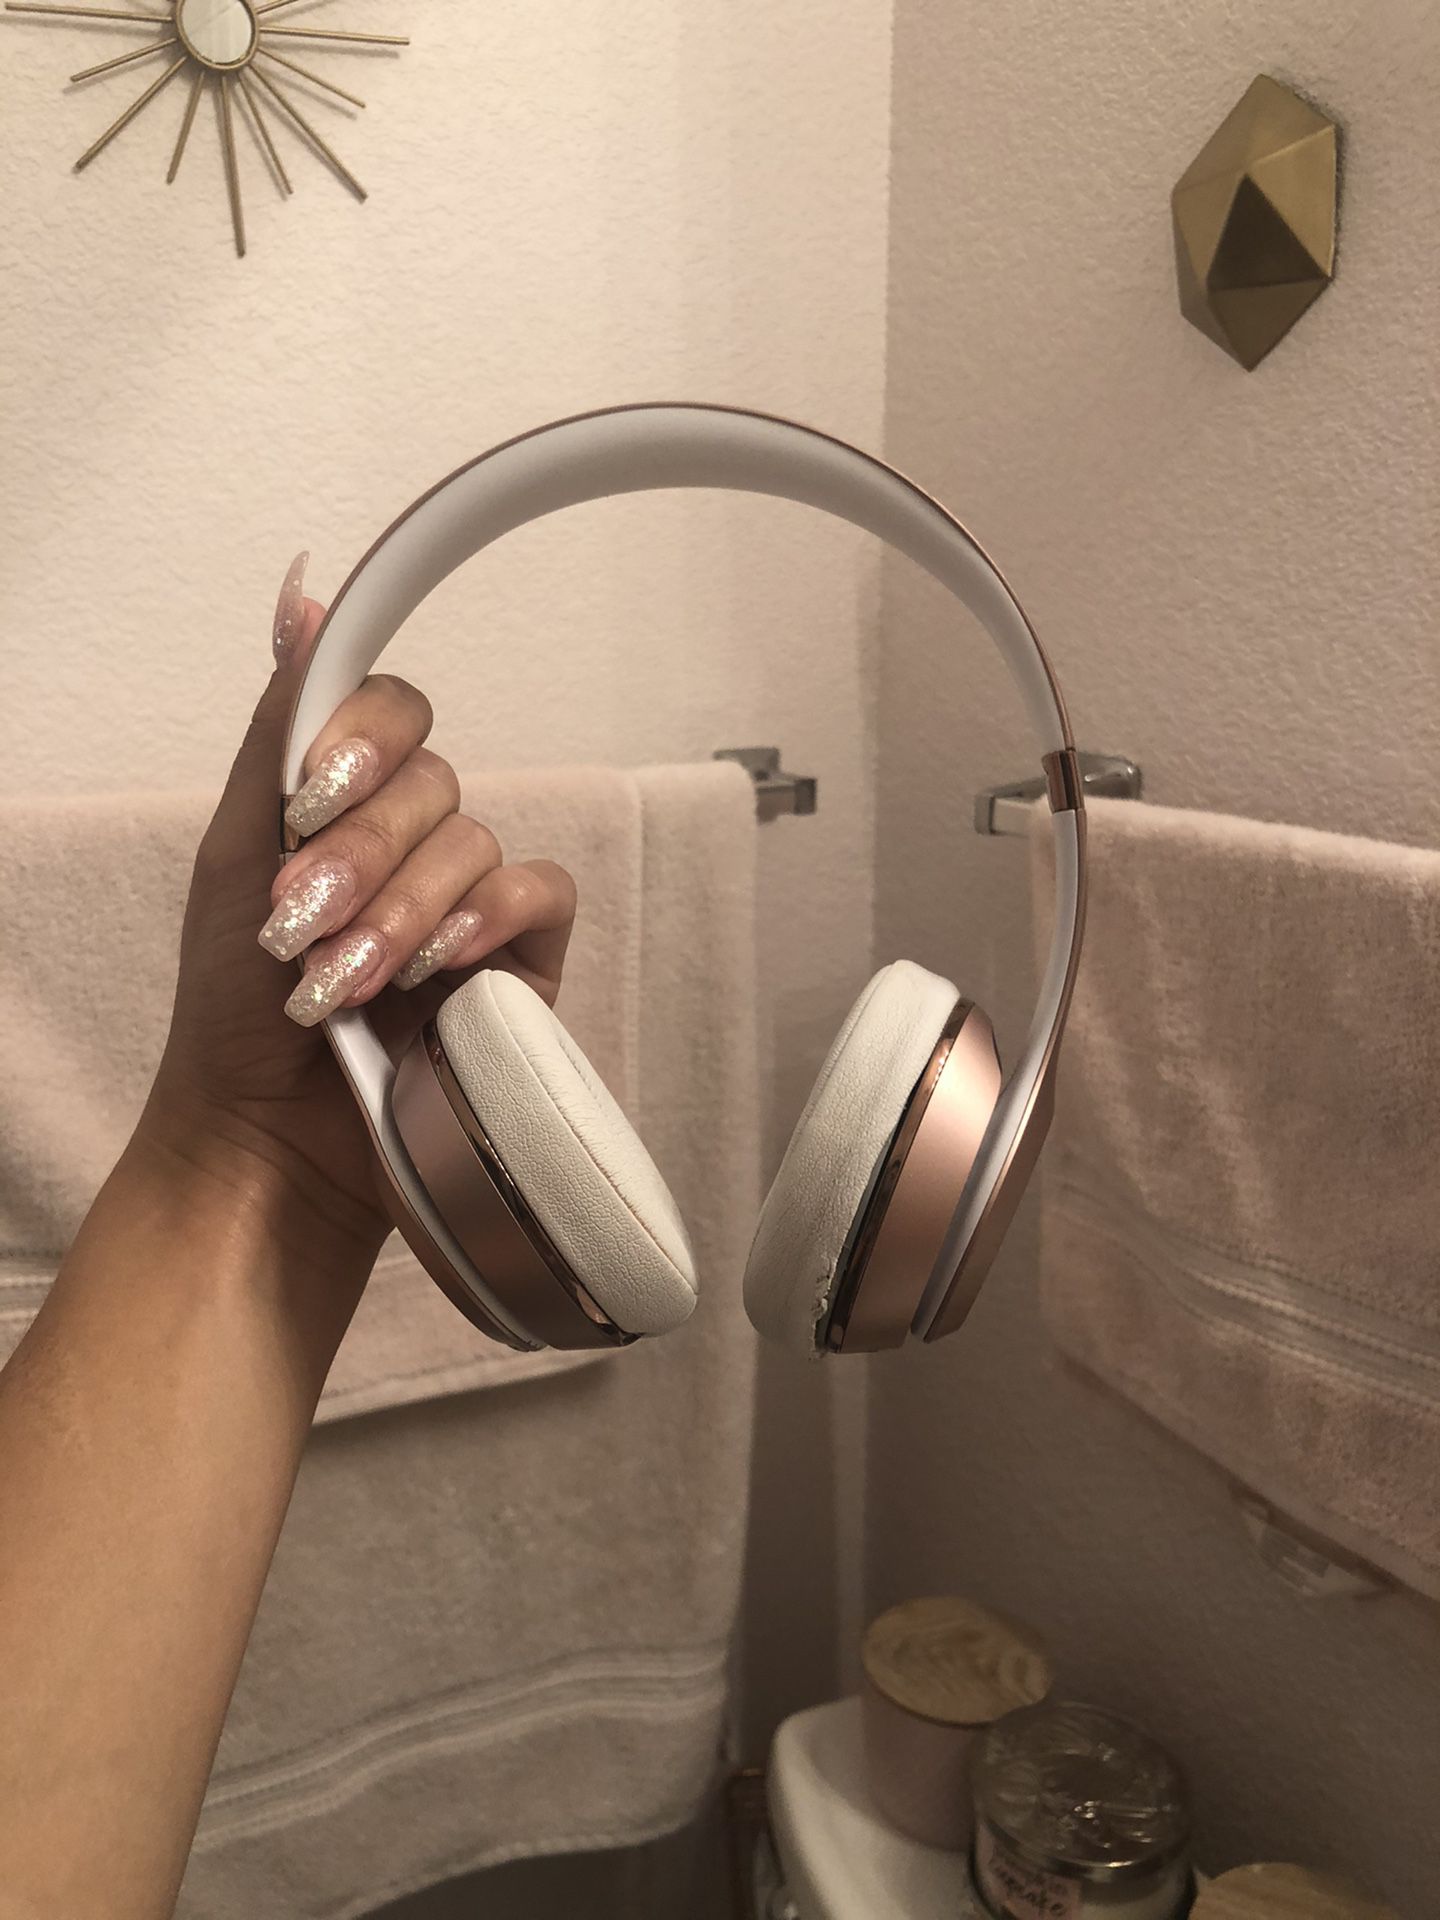 Pink Solo 3 Beats Headphones + Case - BEST OFFER